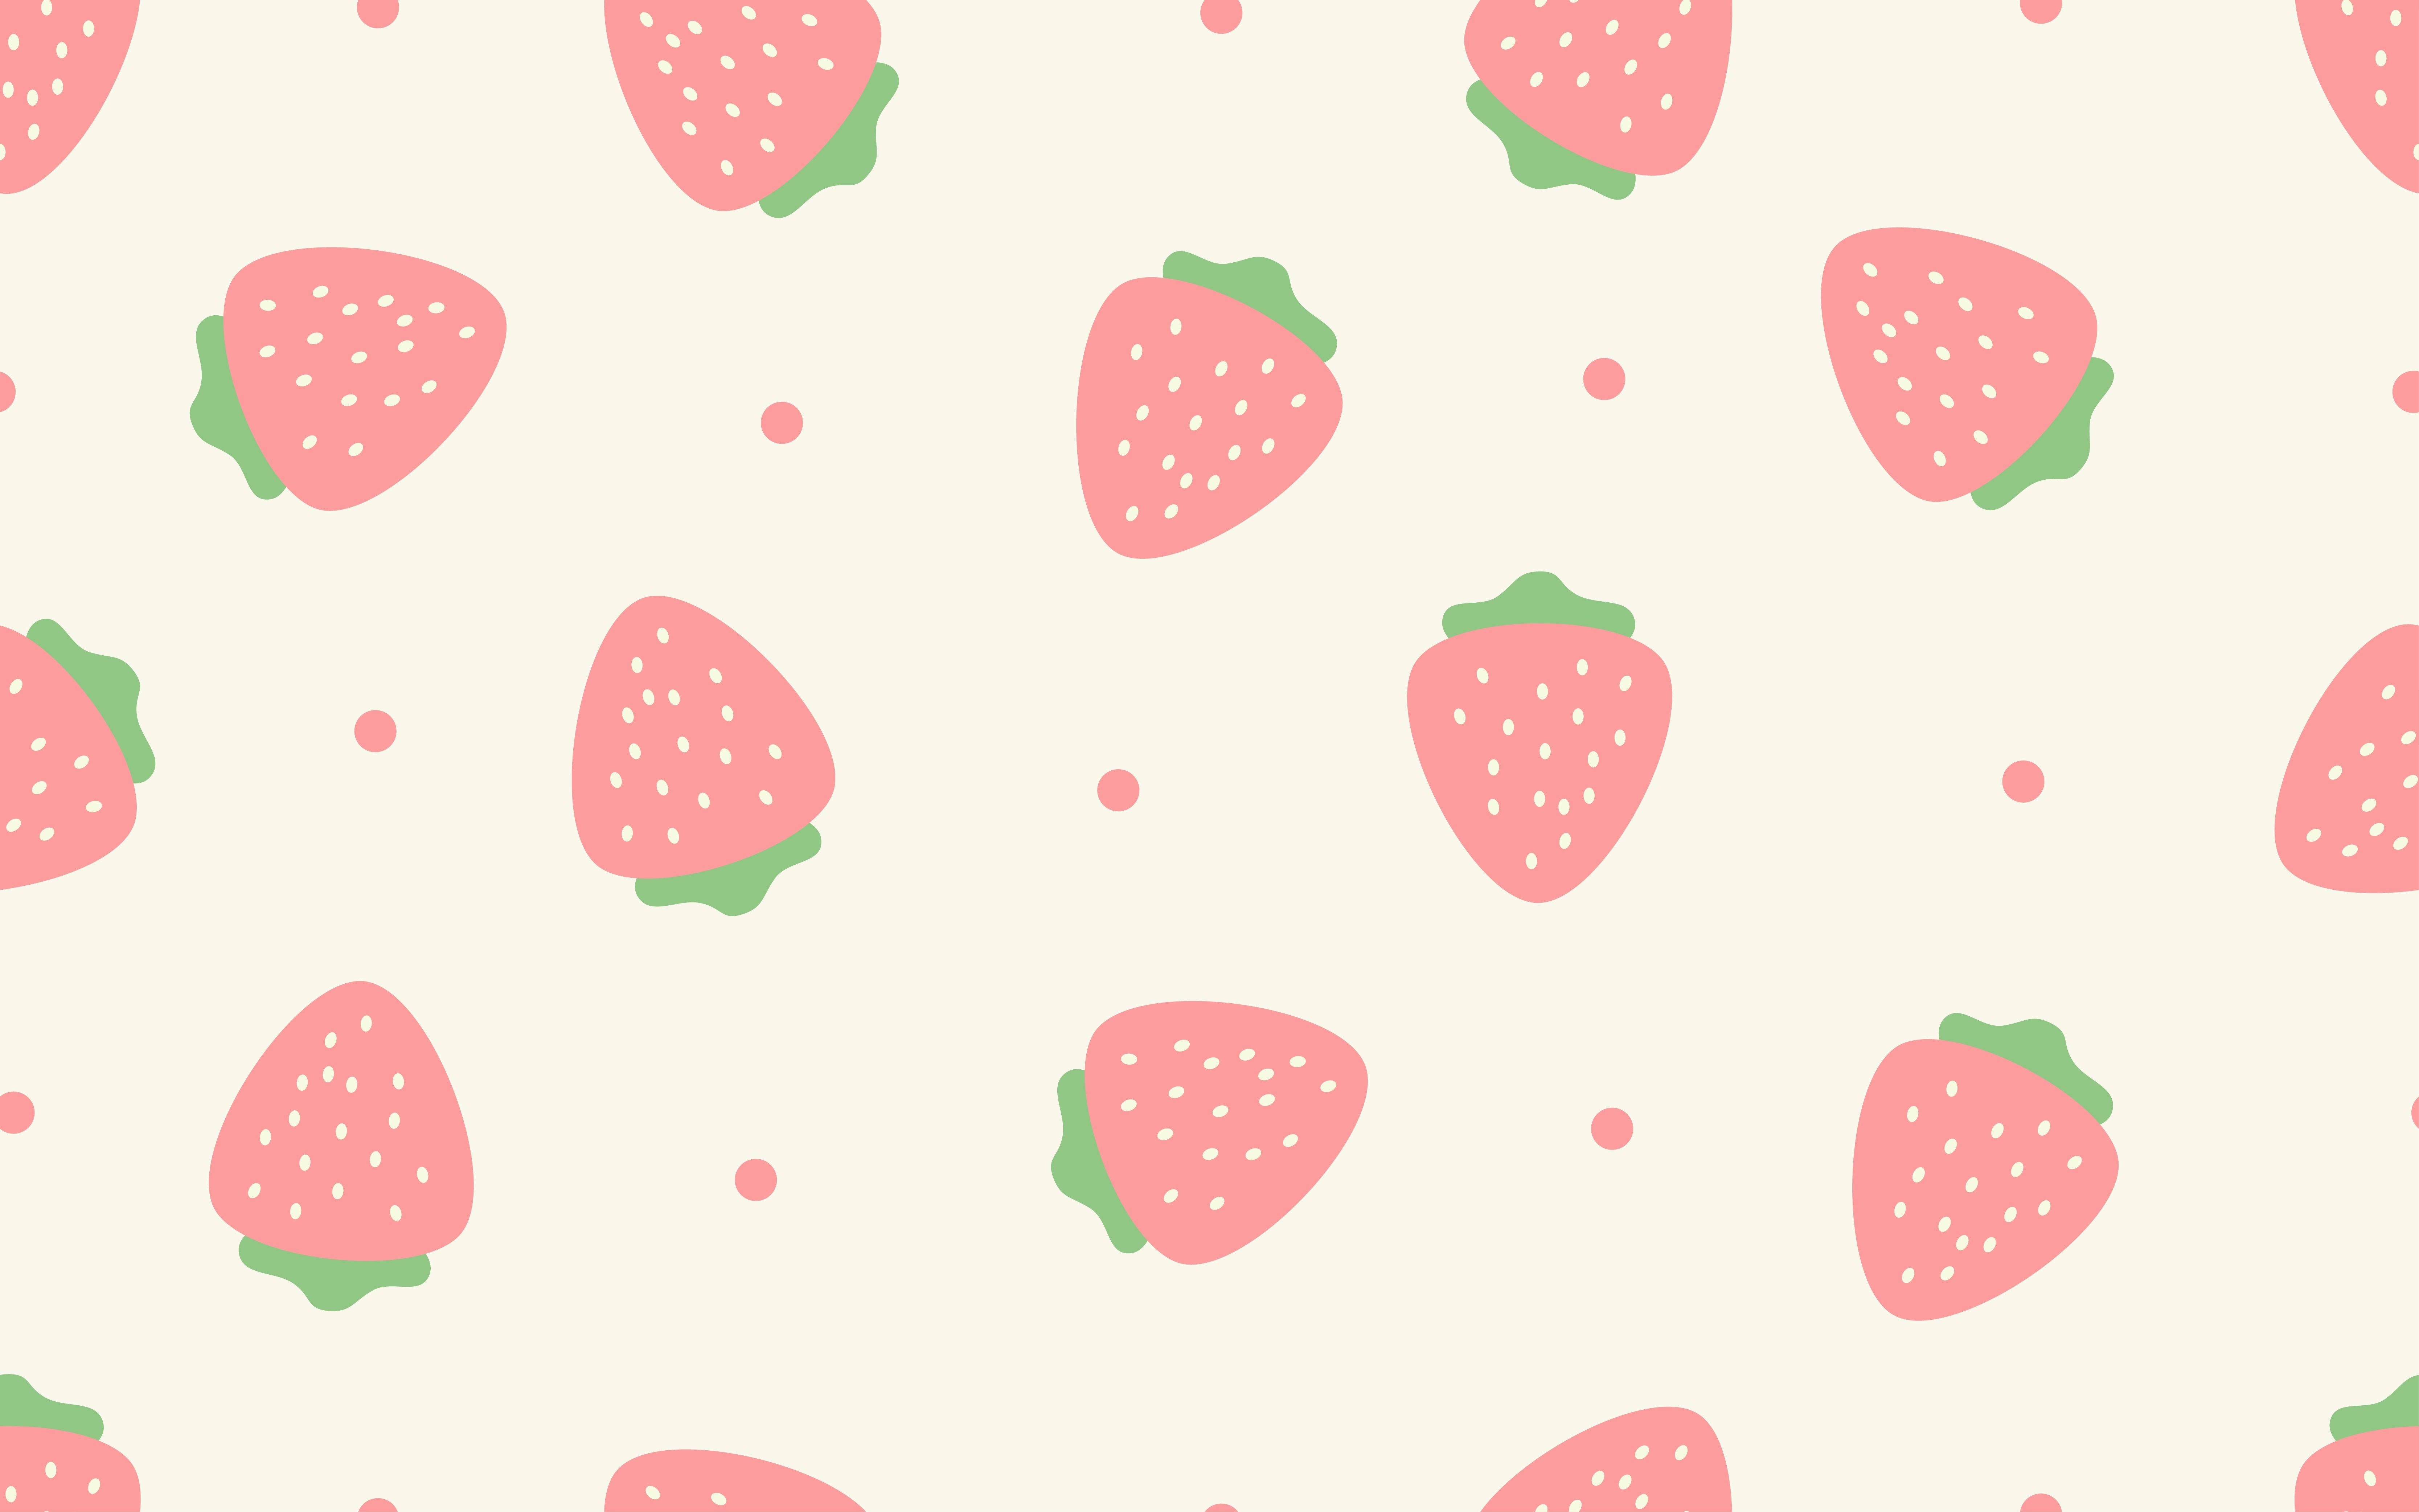 Free Strawberry Desktop Wallpaper Downloads, Strawberry Desktop Wallpaper for FREE